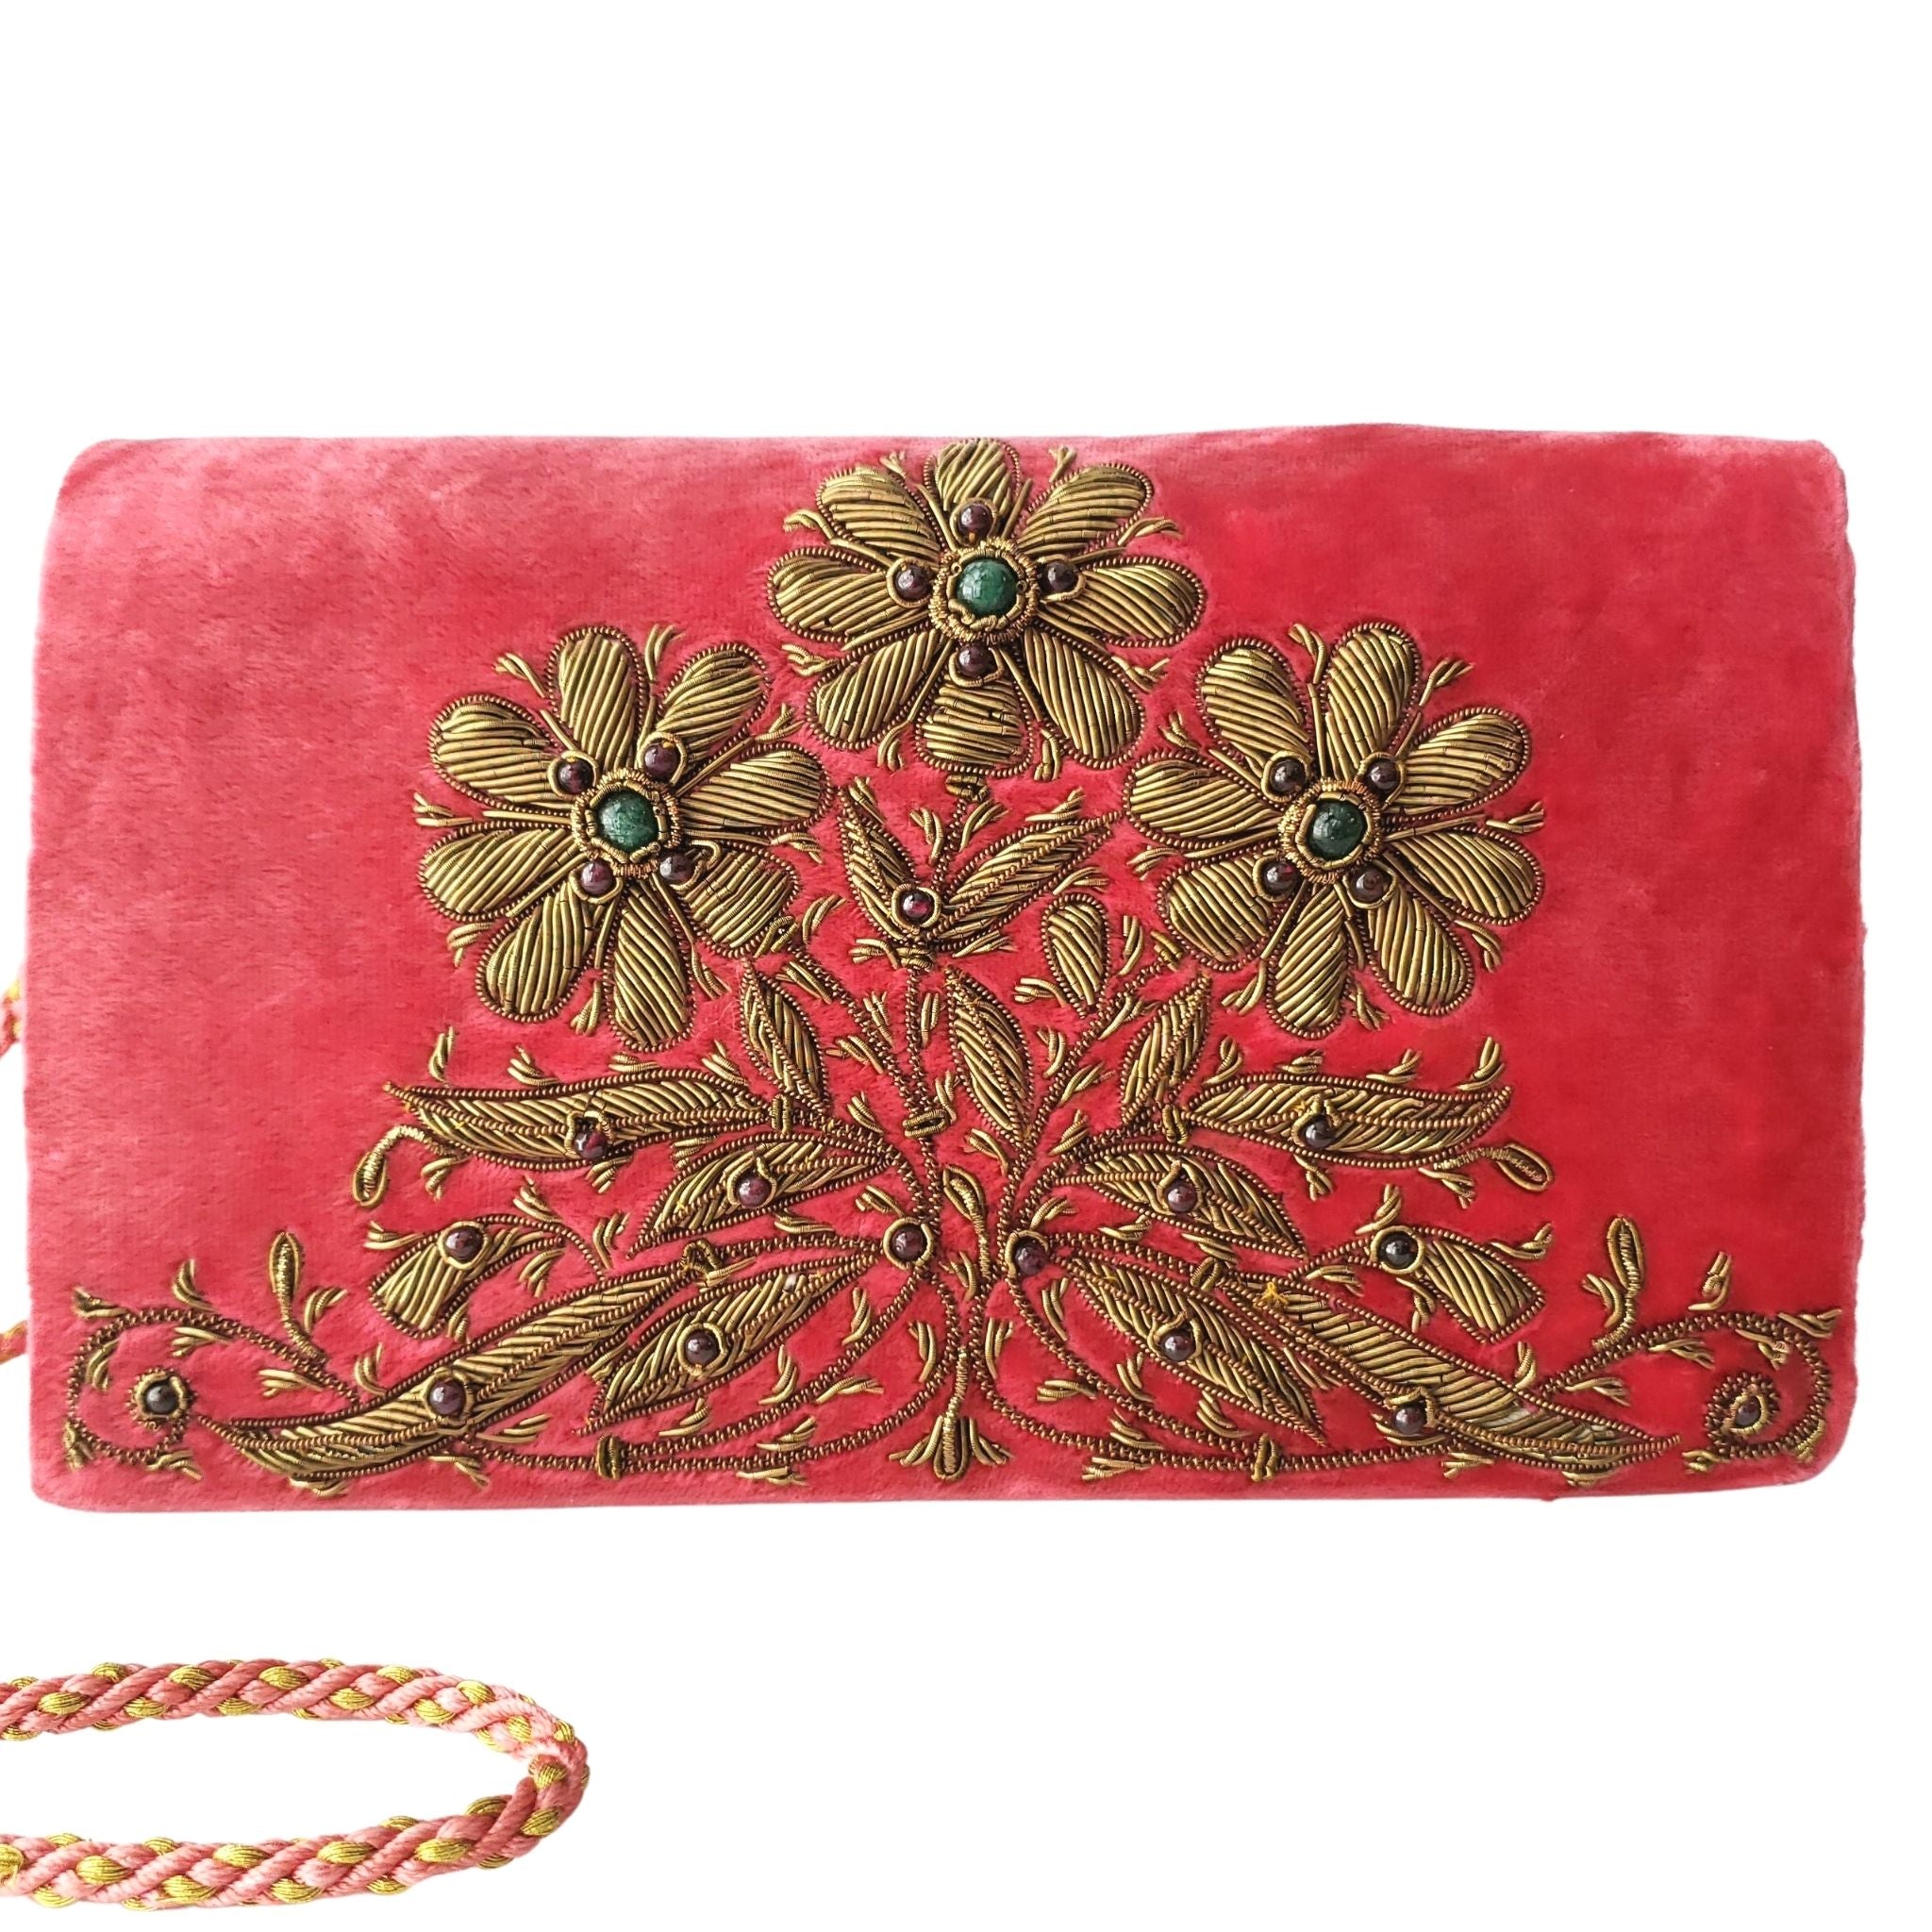 Fashion OVERSEAS Deisgner hand clutch bag For women (Gold) : Amazon.in:  Fashion